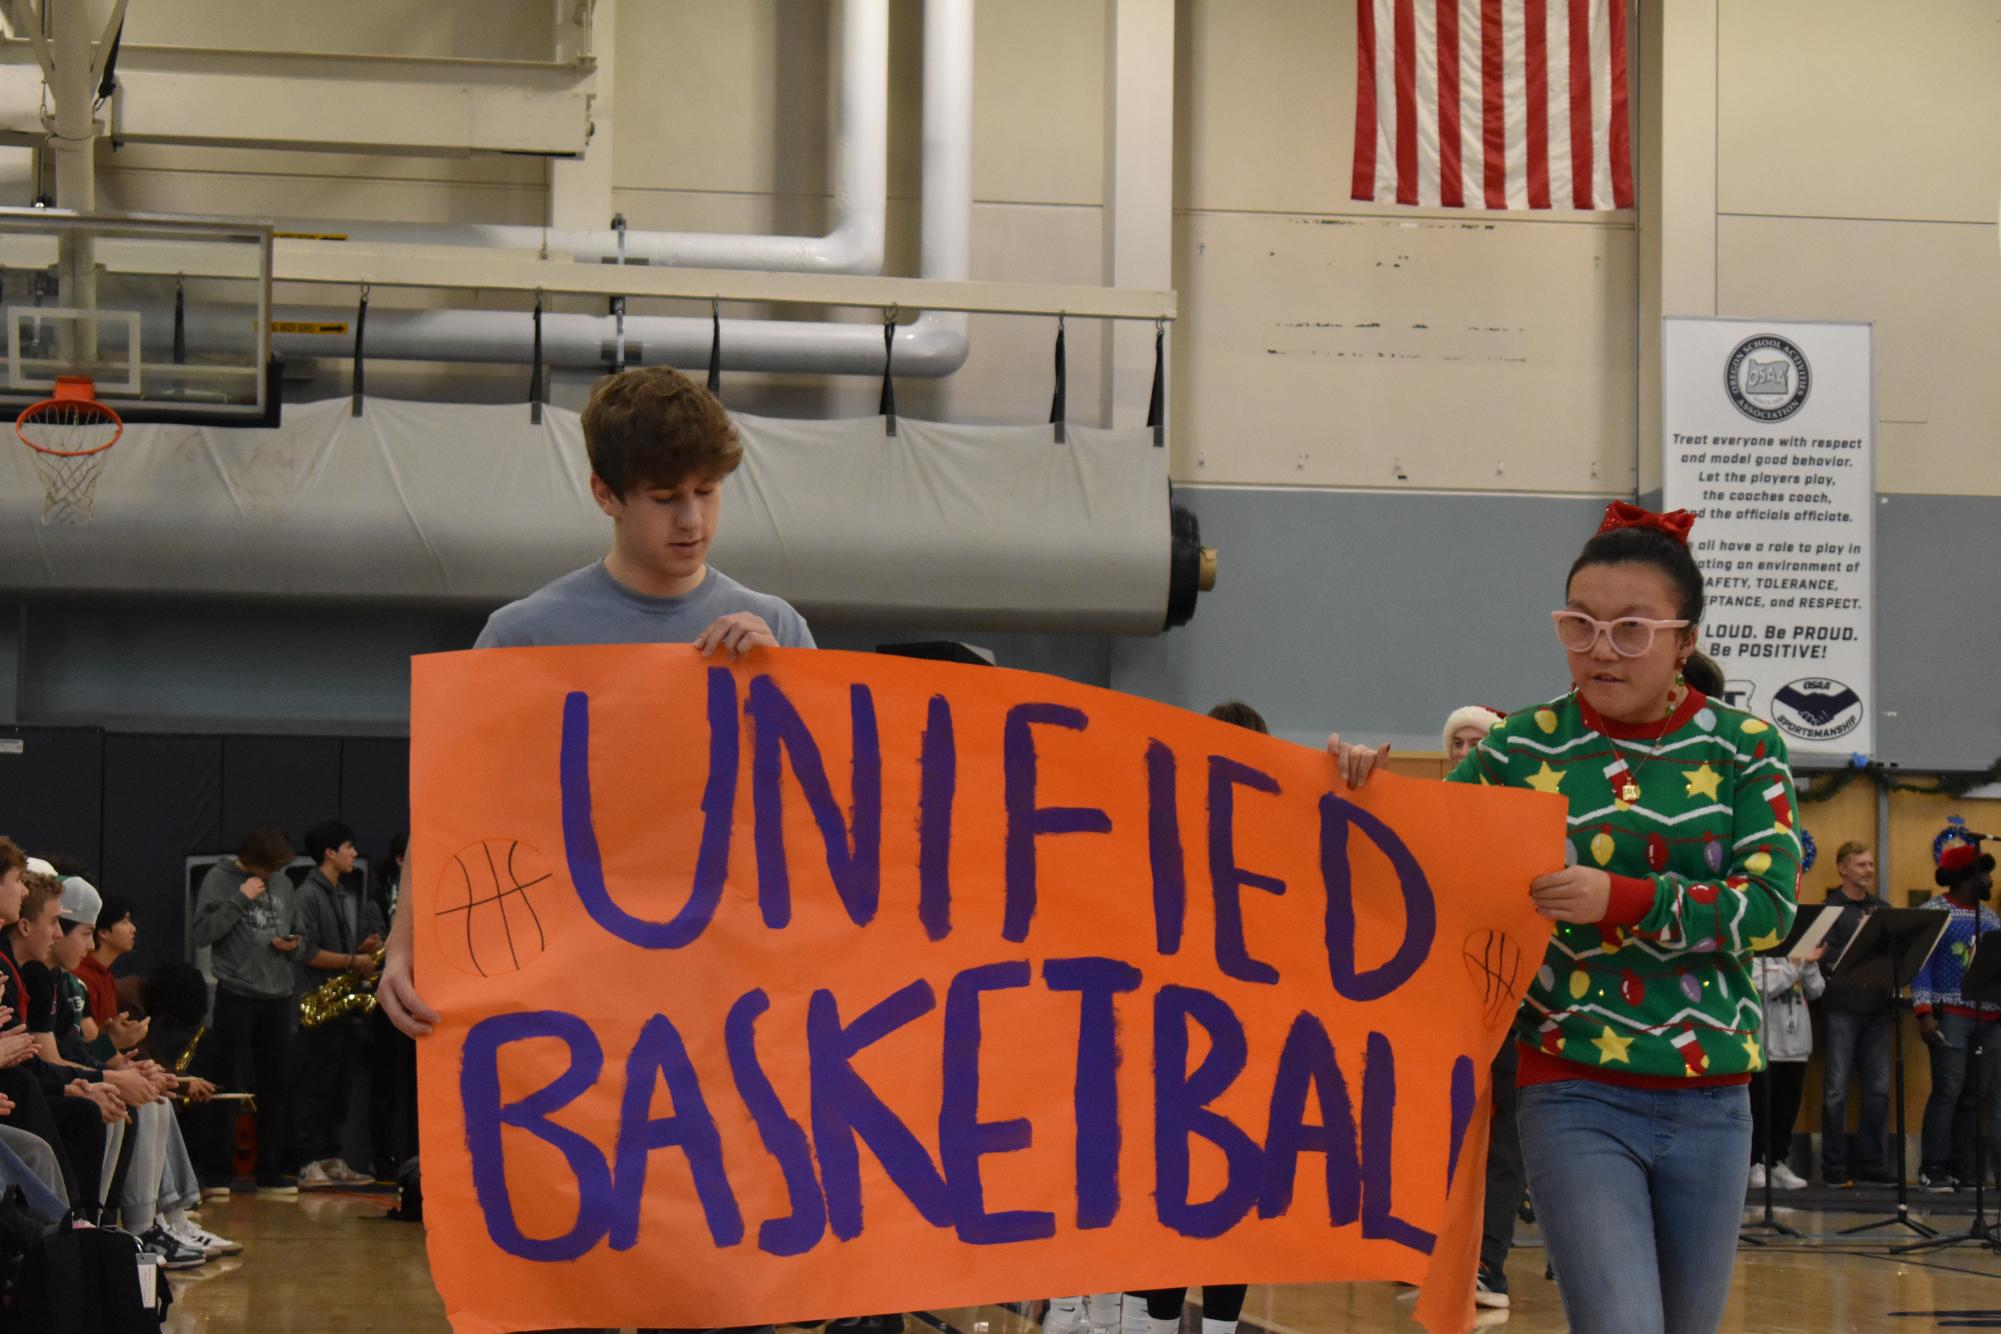 Unified Basketball